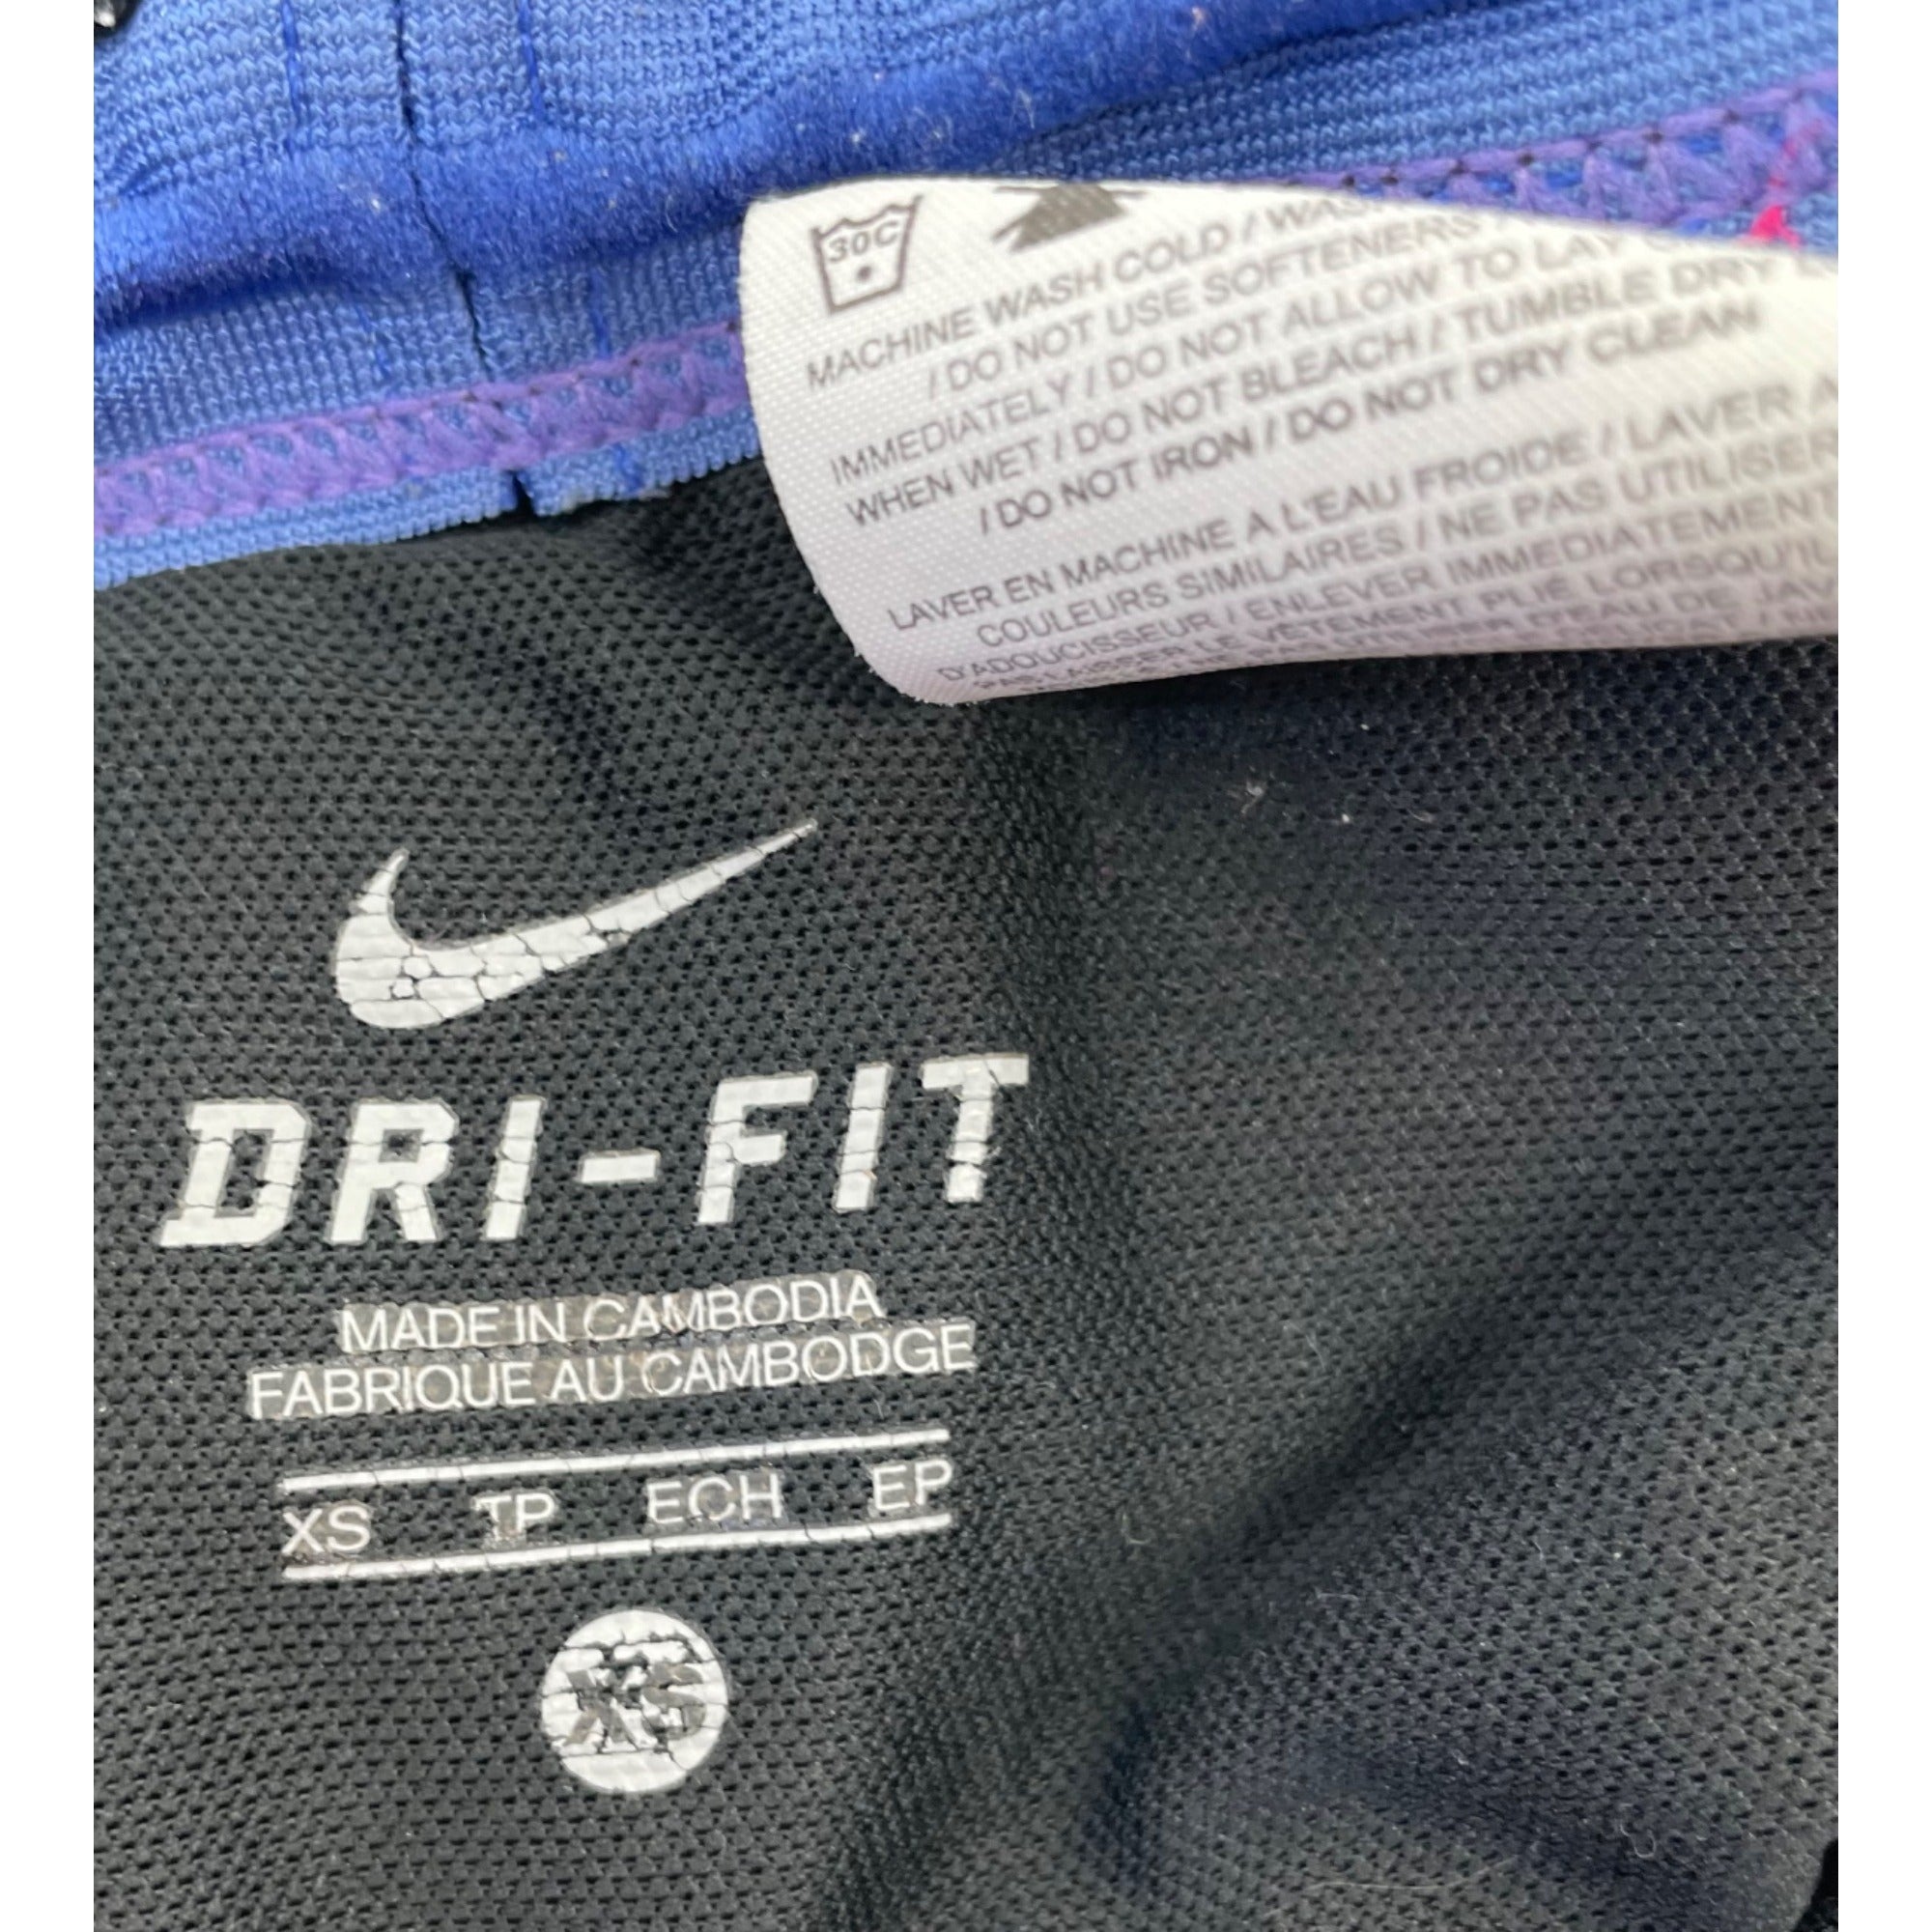 Nike Dry Fit Women's Size XS Black & Blue Workout Leggings